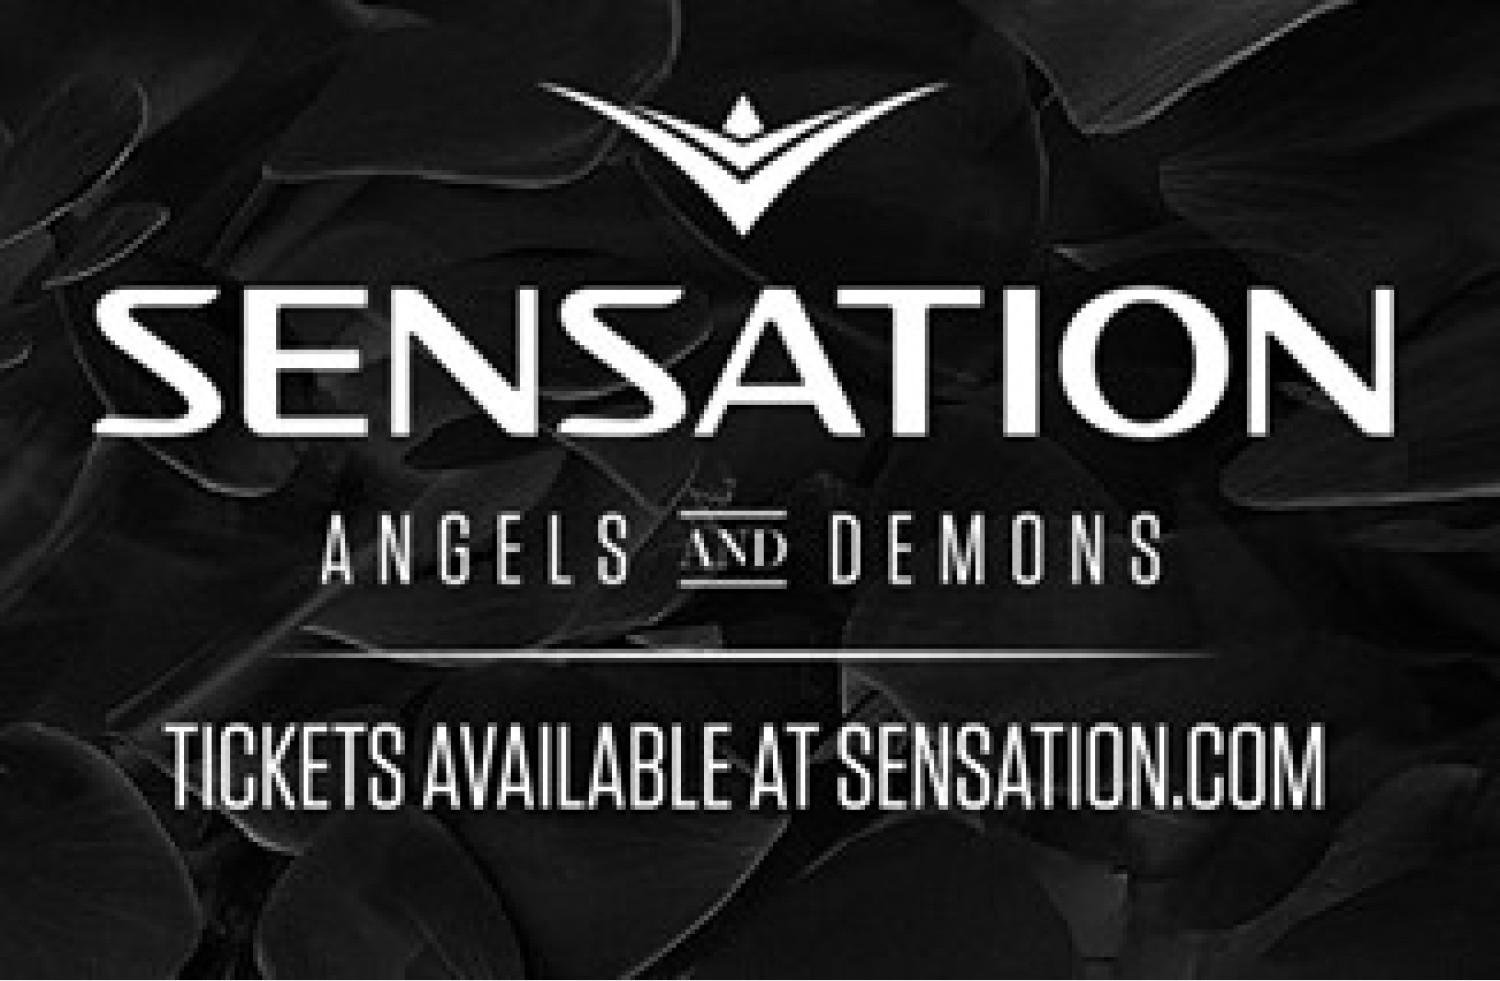 Party nieuws: Sensation lanceert 'Angels and Demons' Anthem!!